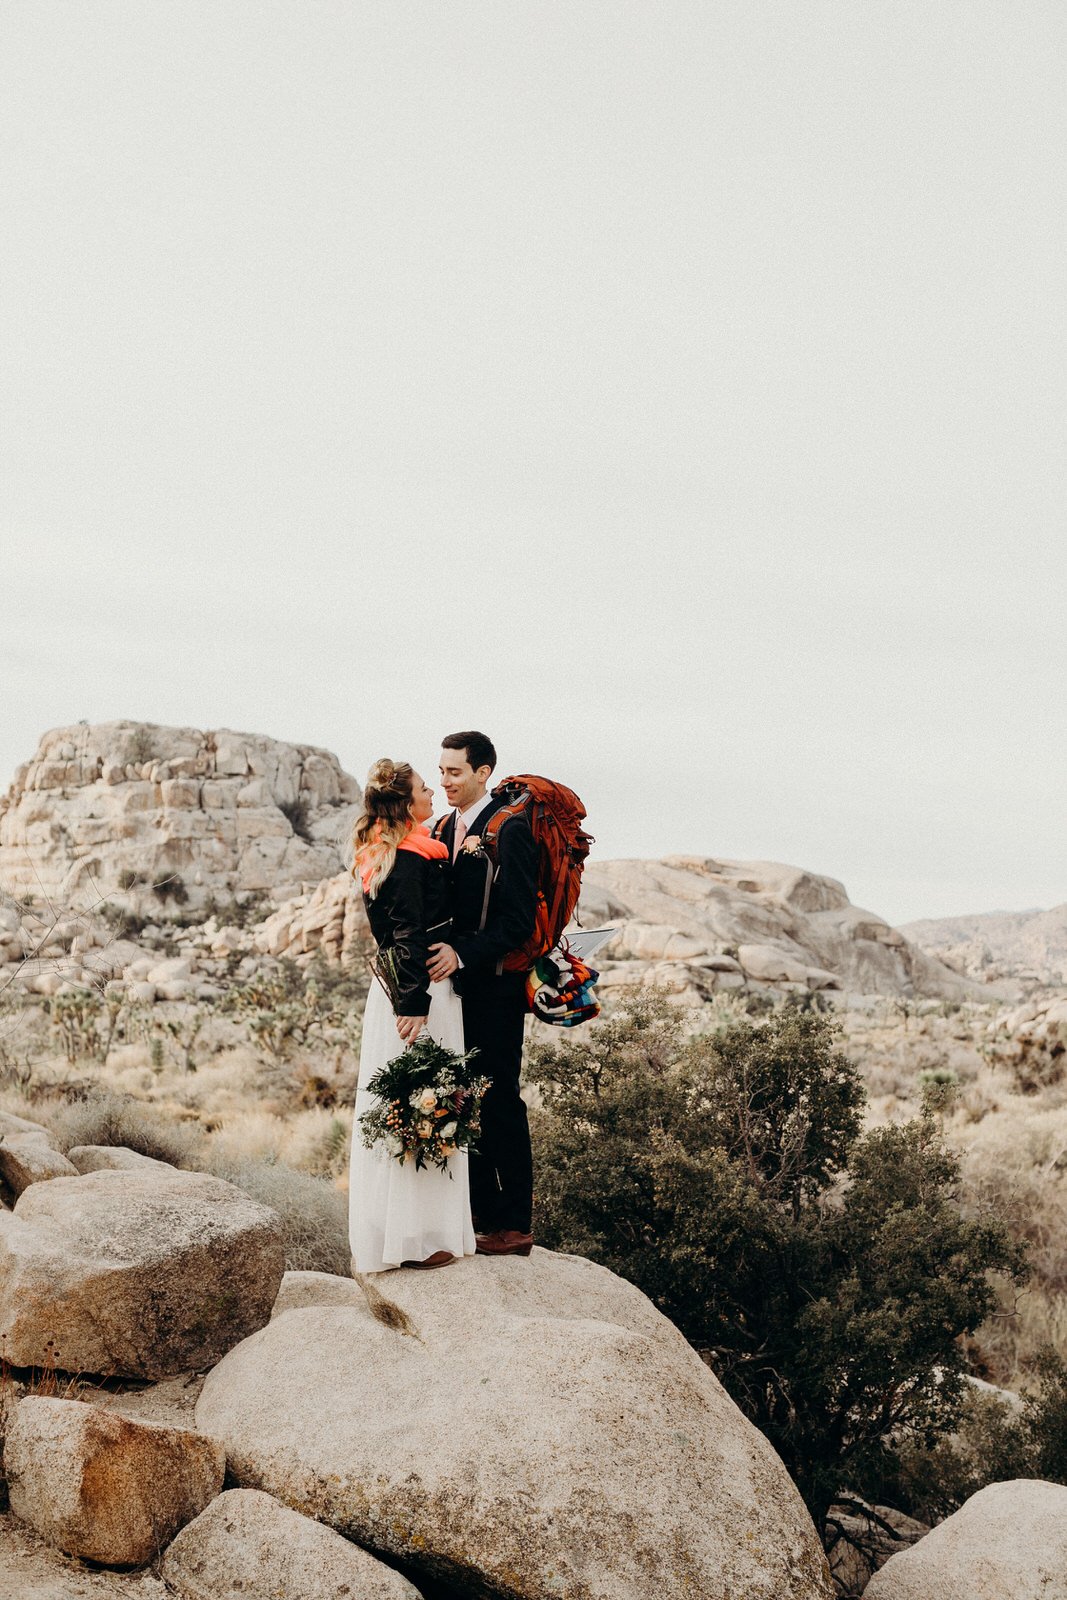 Backpacking-Elopement-Bride-and-Groom-on-Boulders-Utah-Wedding-Photographer-Img-by-Vic-Bonvicini.jpg